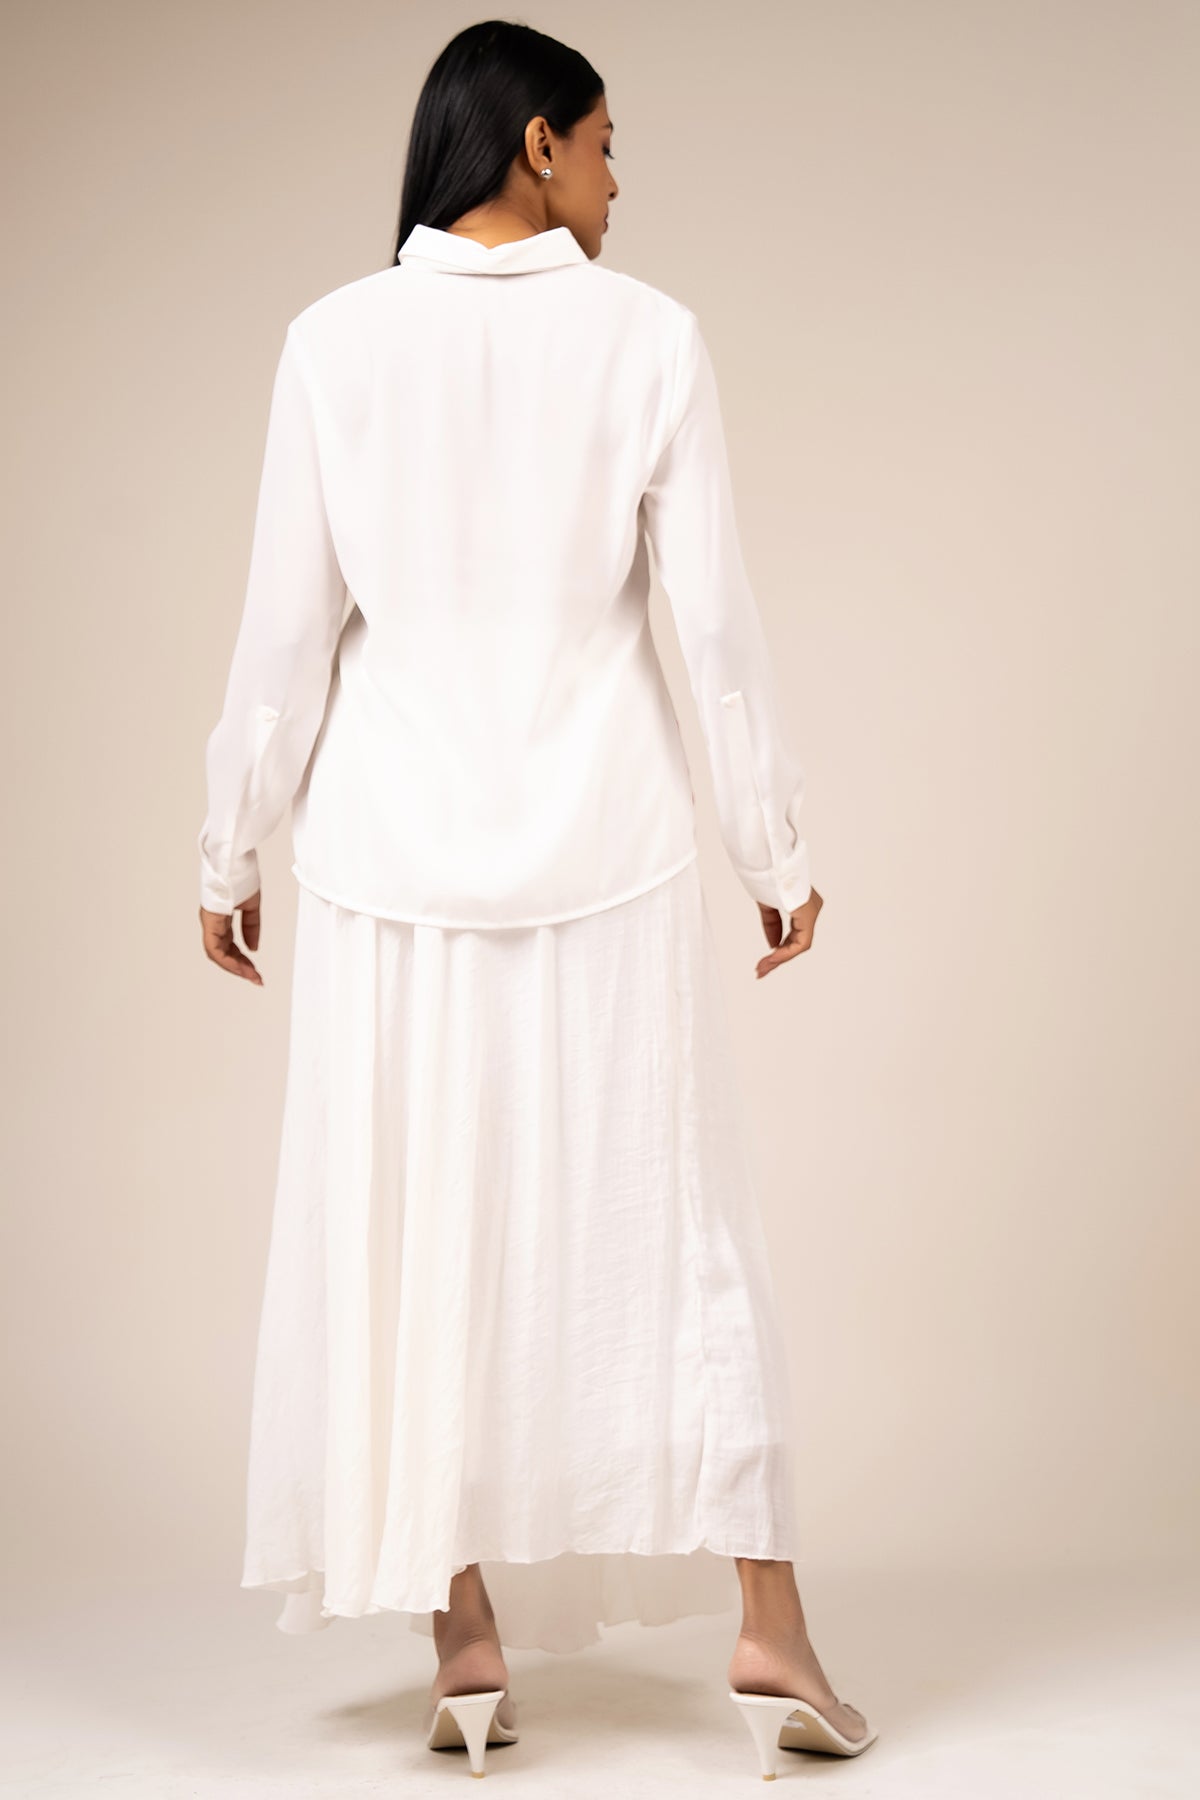 Envogue Women's Long Sleeve Printed Casual Shirt